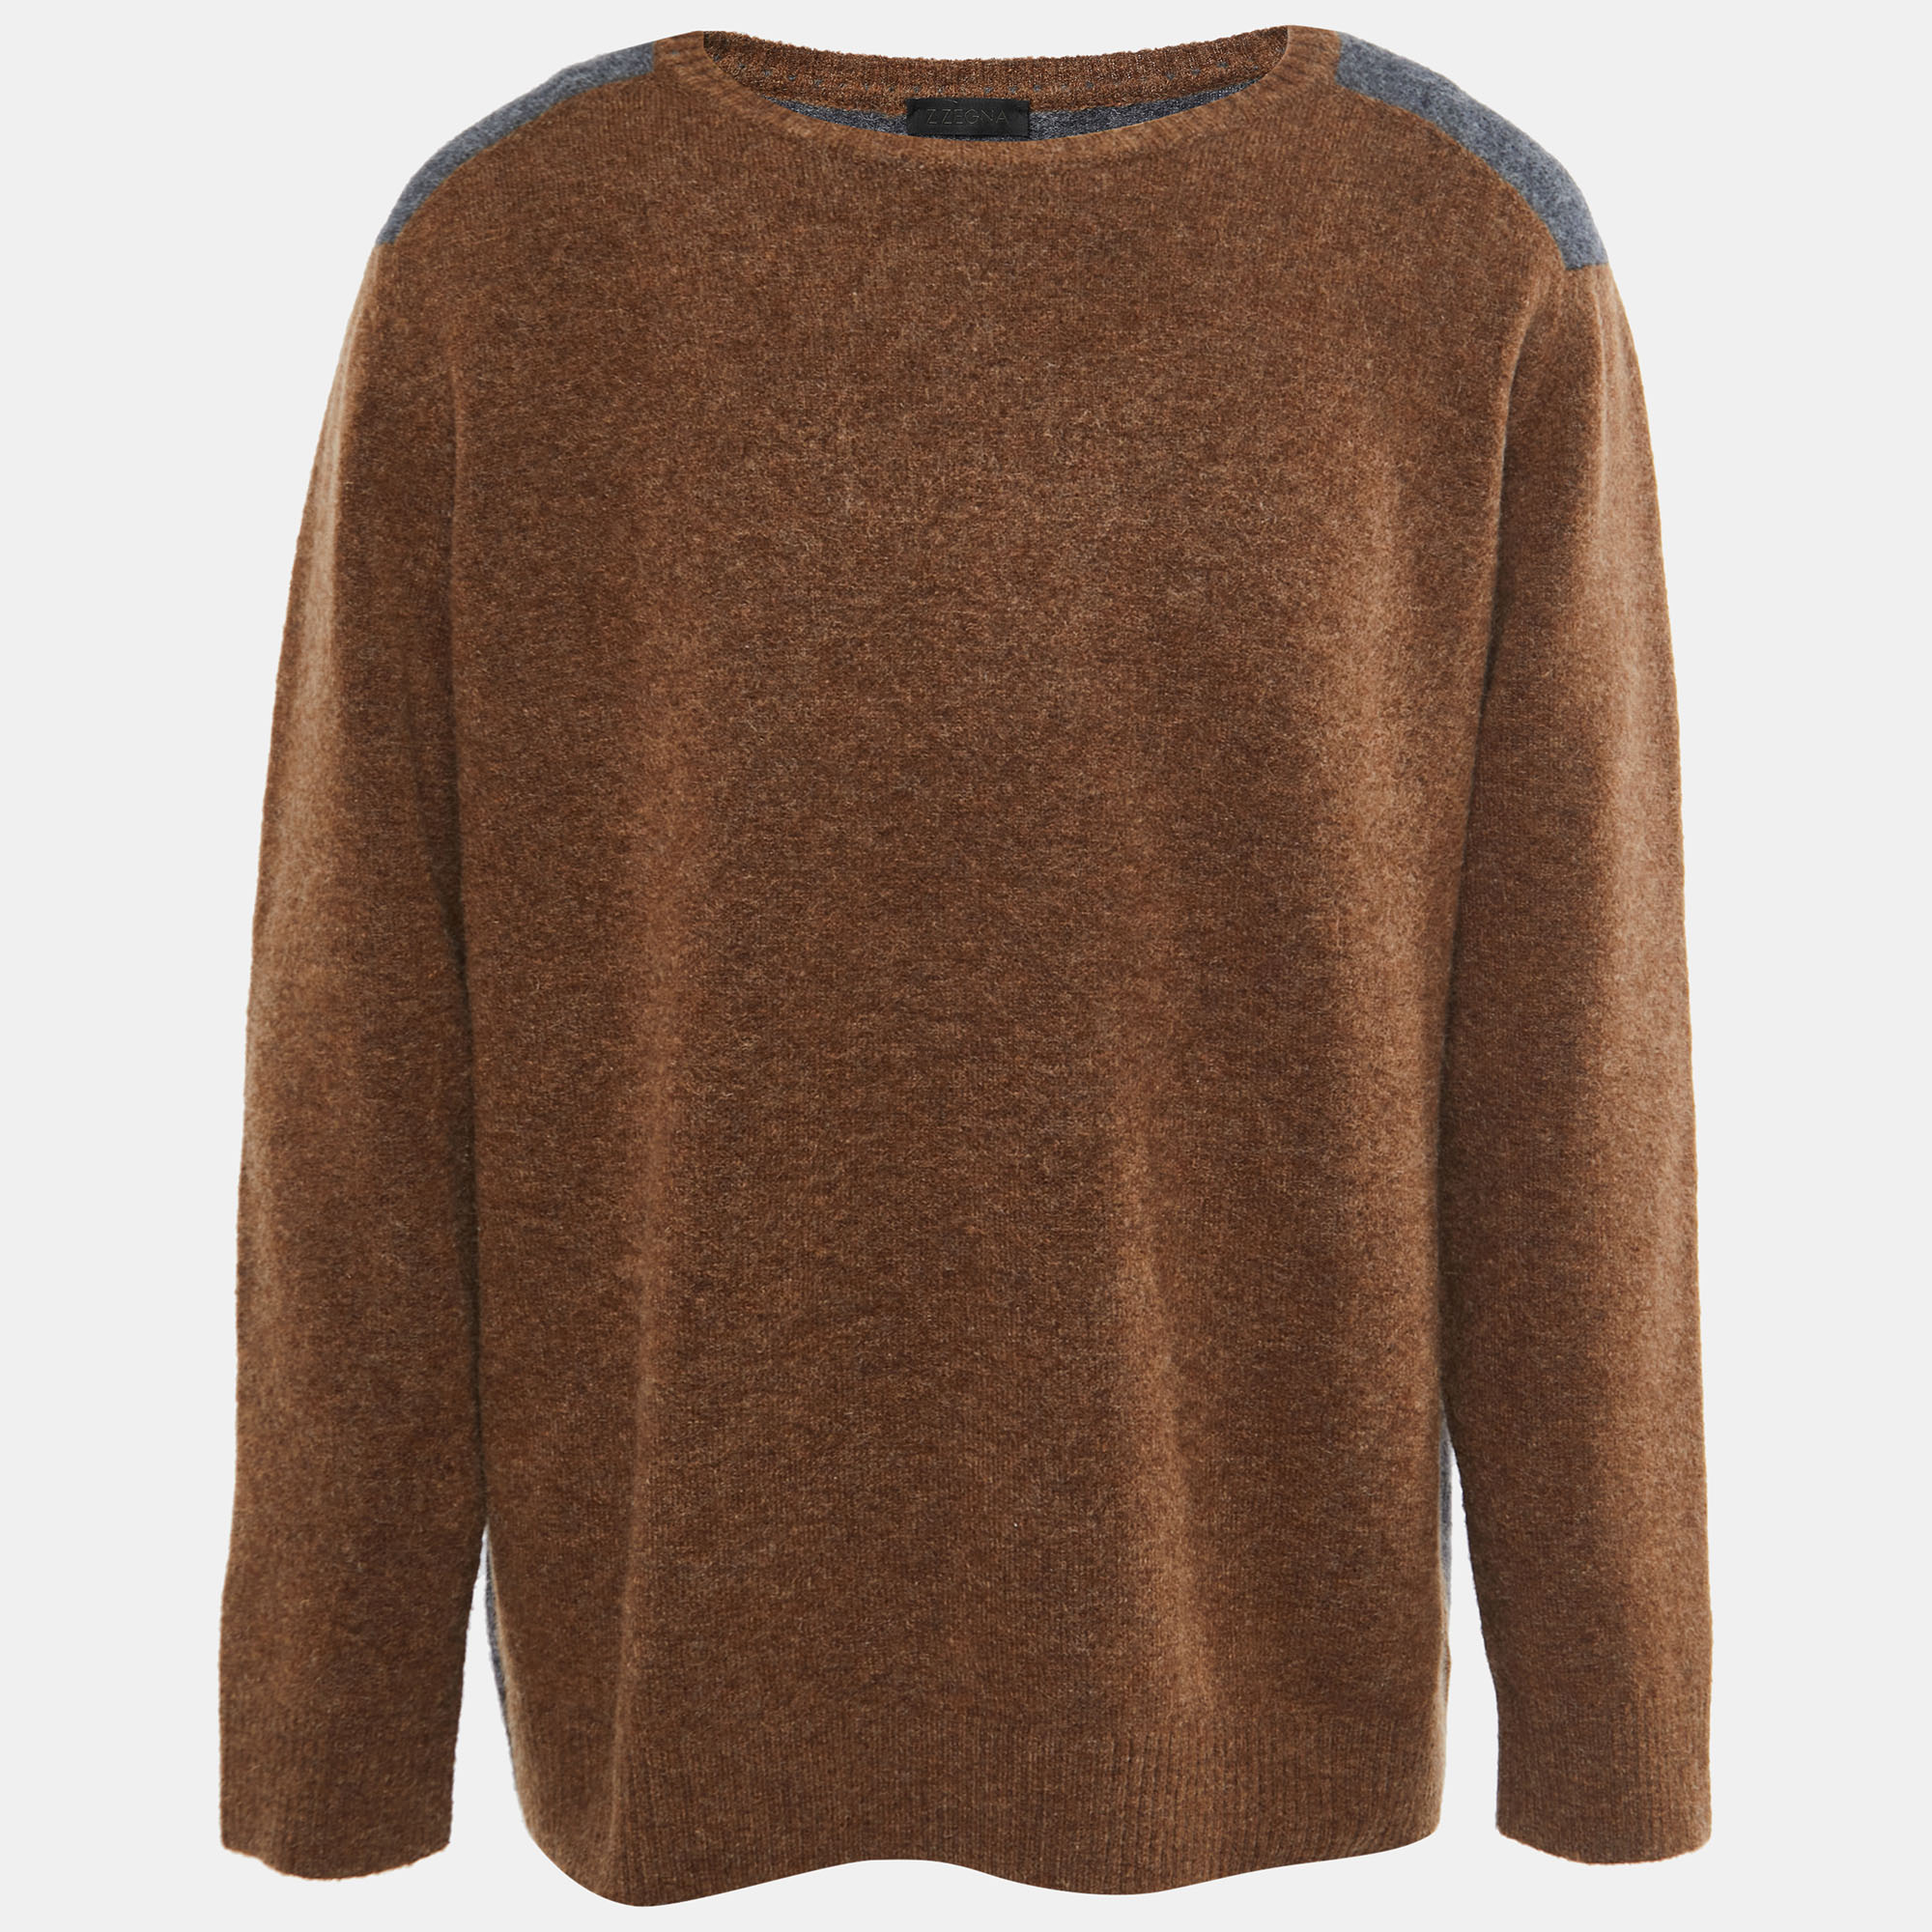 Zegna wool sweater